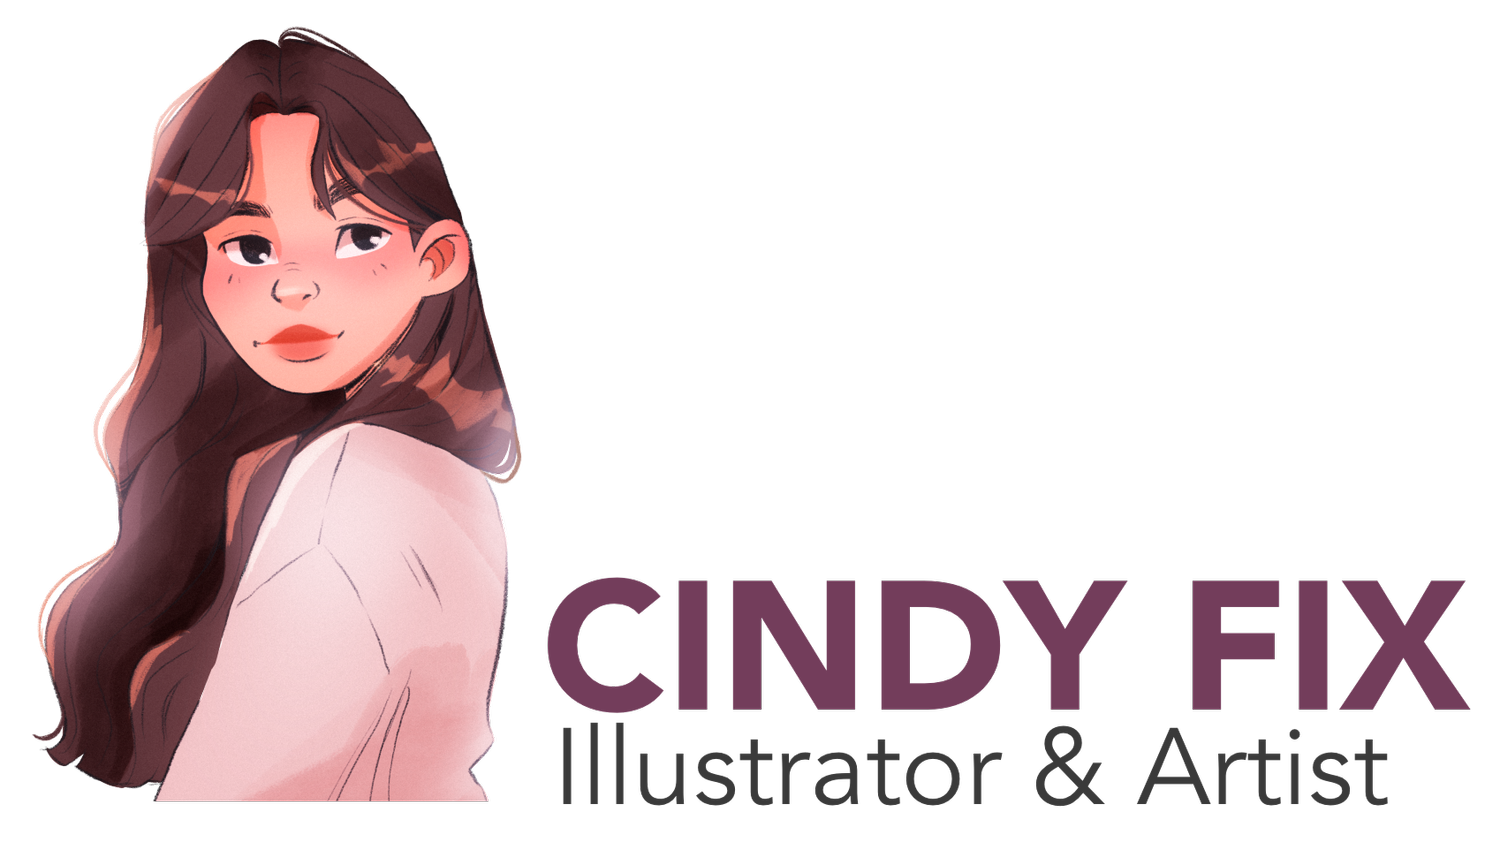 CINDY FIX - Portfolio